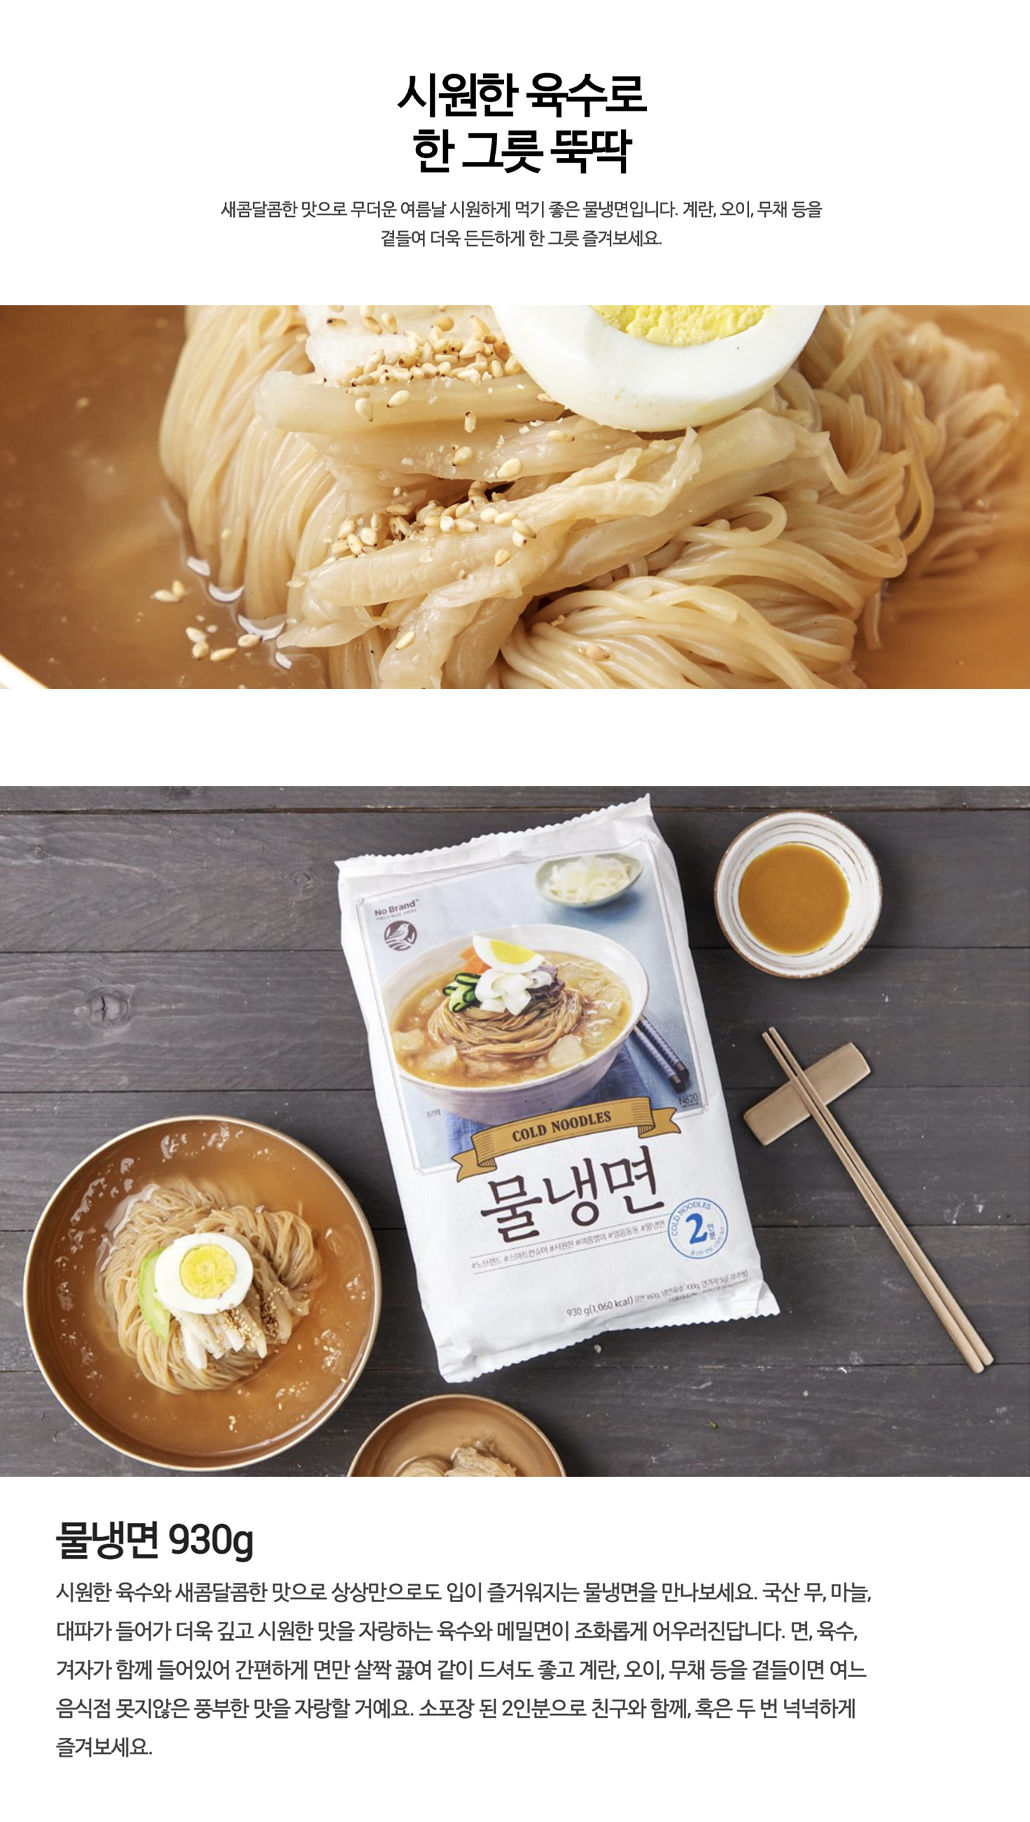 韓國食品-[No Brand] Cold Noodles 930g